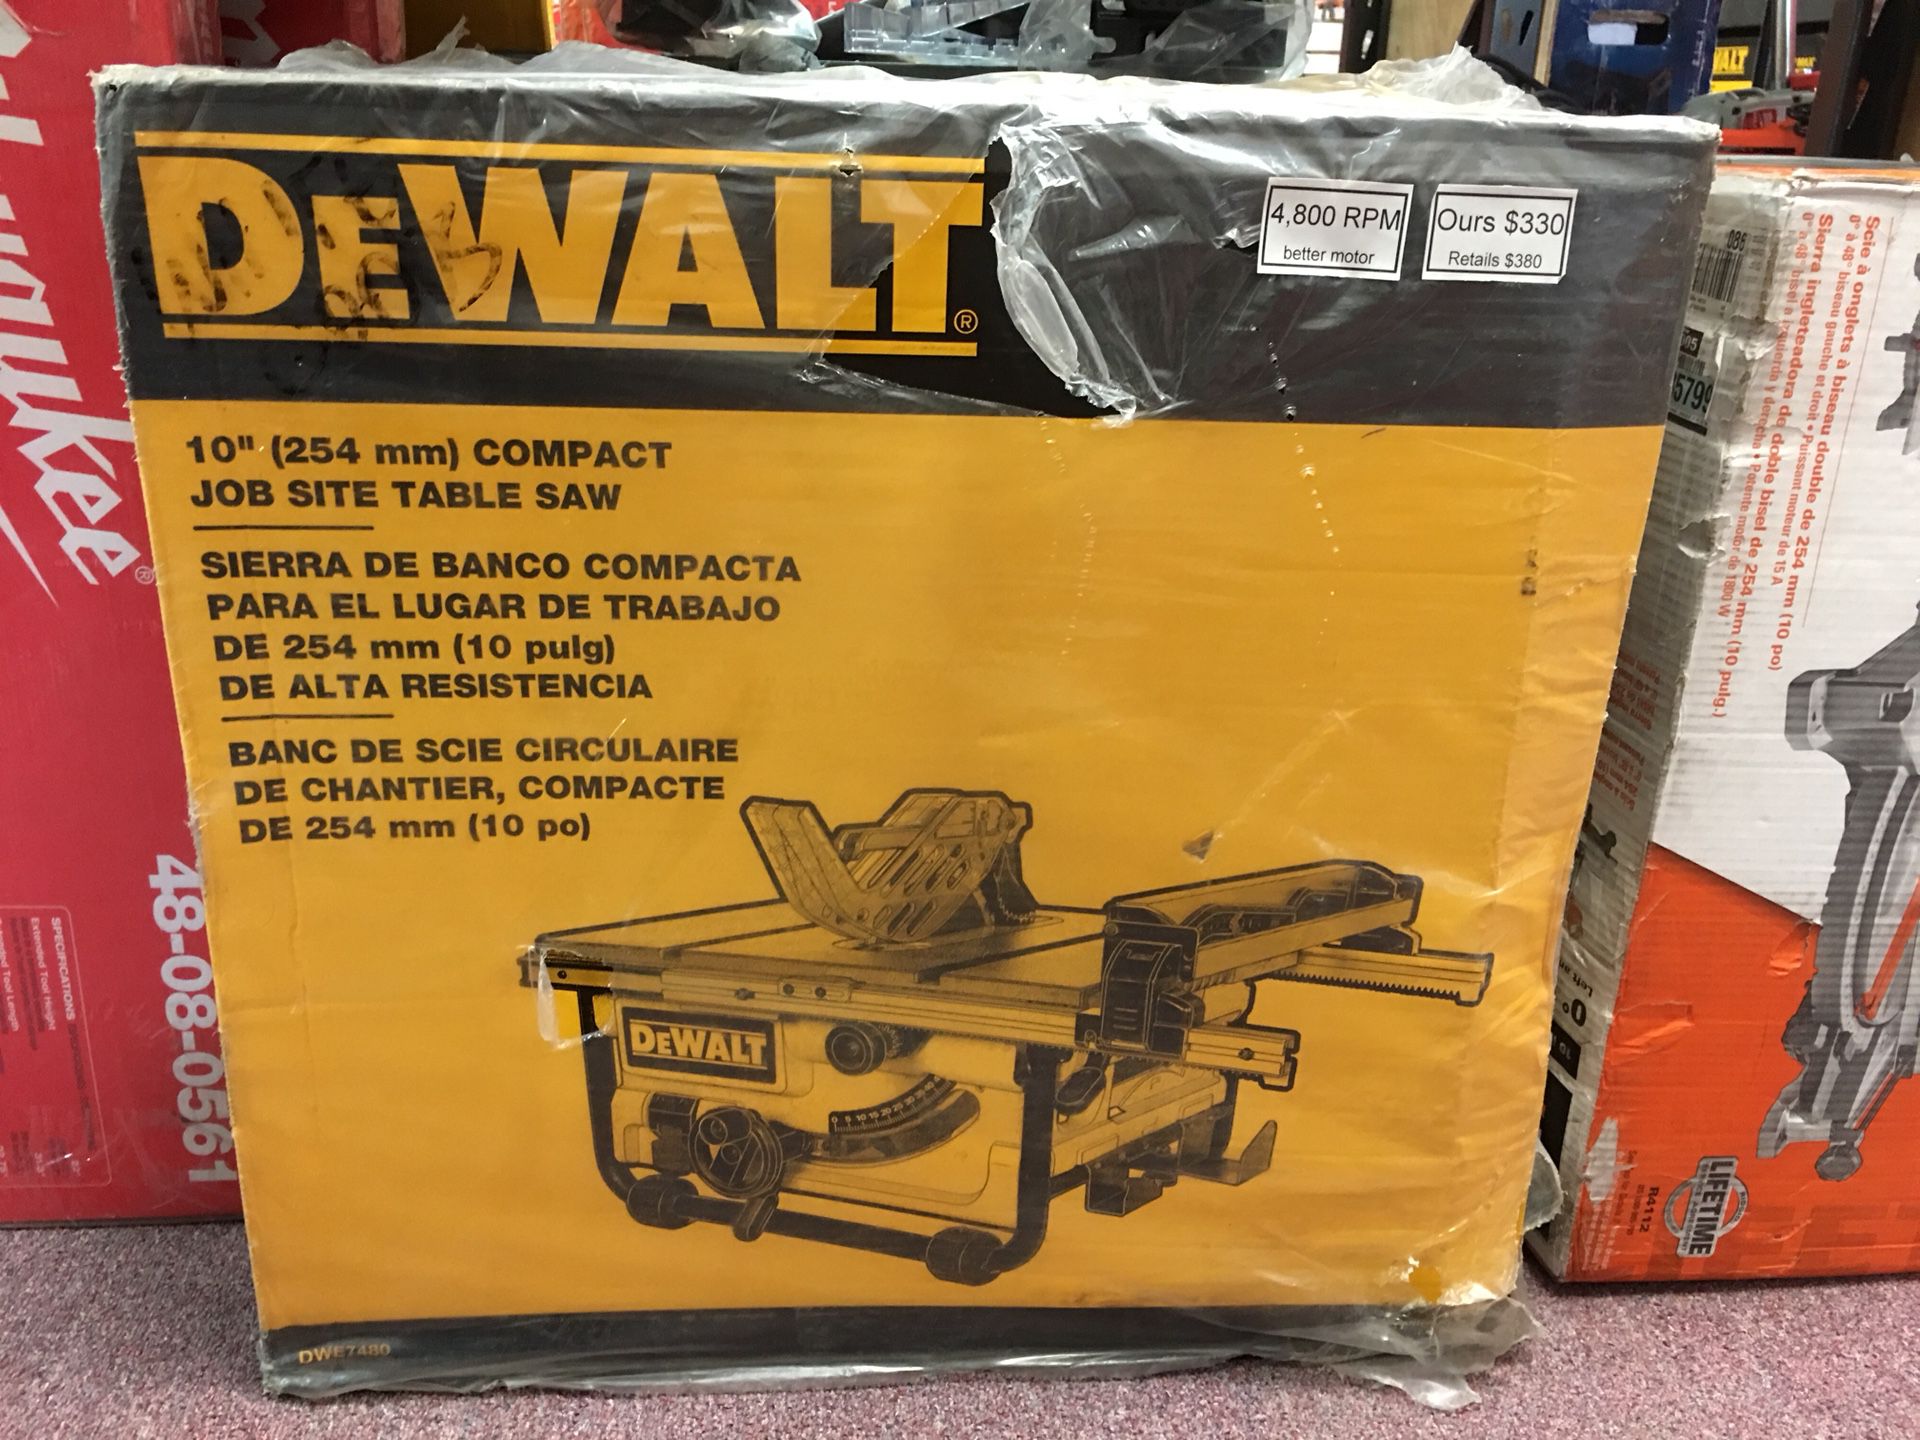 New Dewalt 10” Jobsite Table Saw. DWE7480